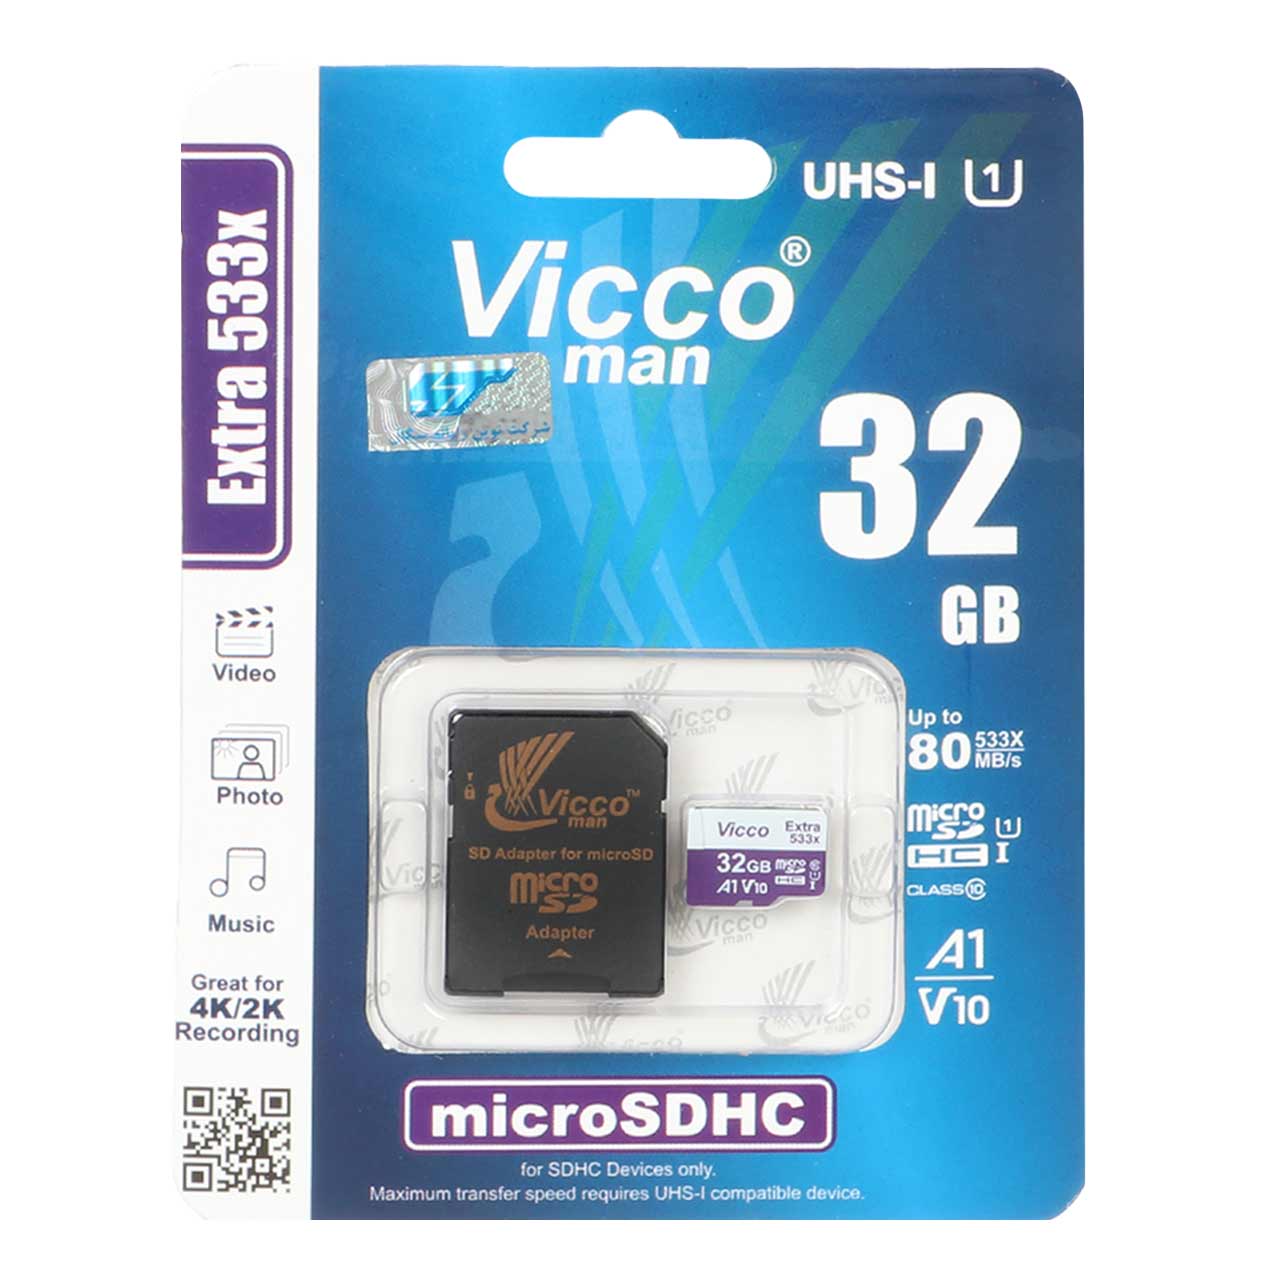 Vicco man MicroSDHC & adaptor UHS-I U1 Class10 Extra 533X-